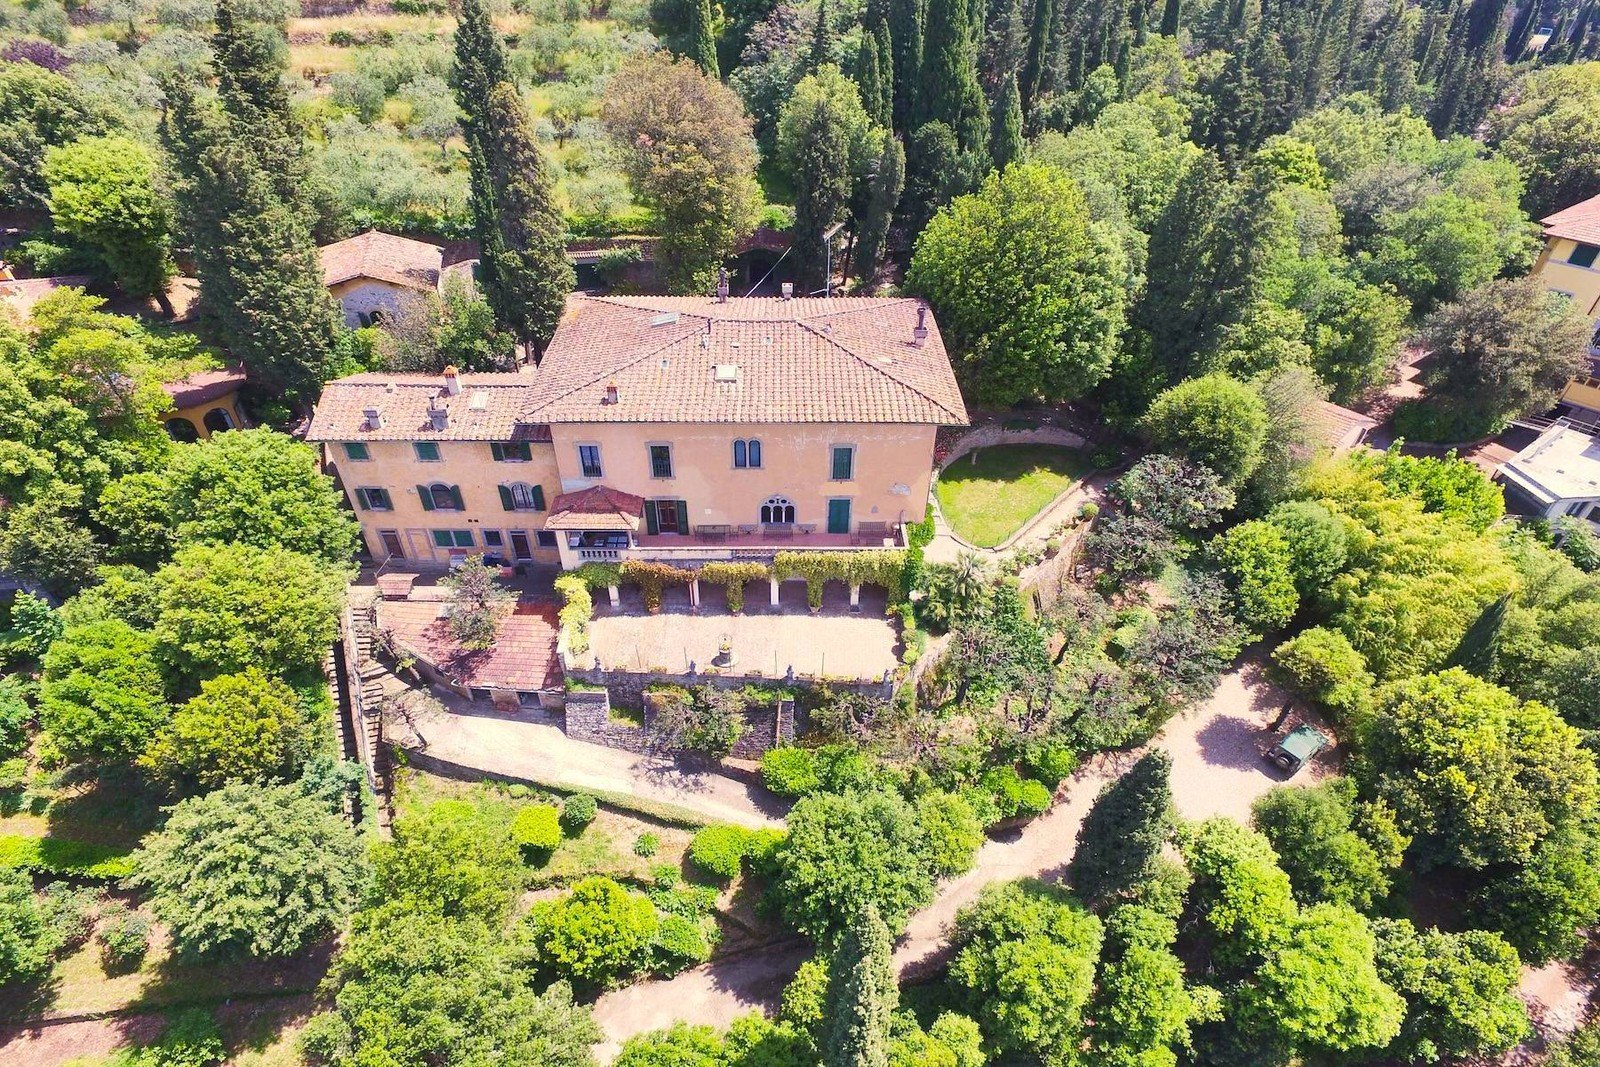 Francis York Italian Villa Set in the Tuscan Hills Overlooking Florence, Italy 00040.jpeg